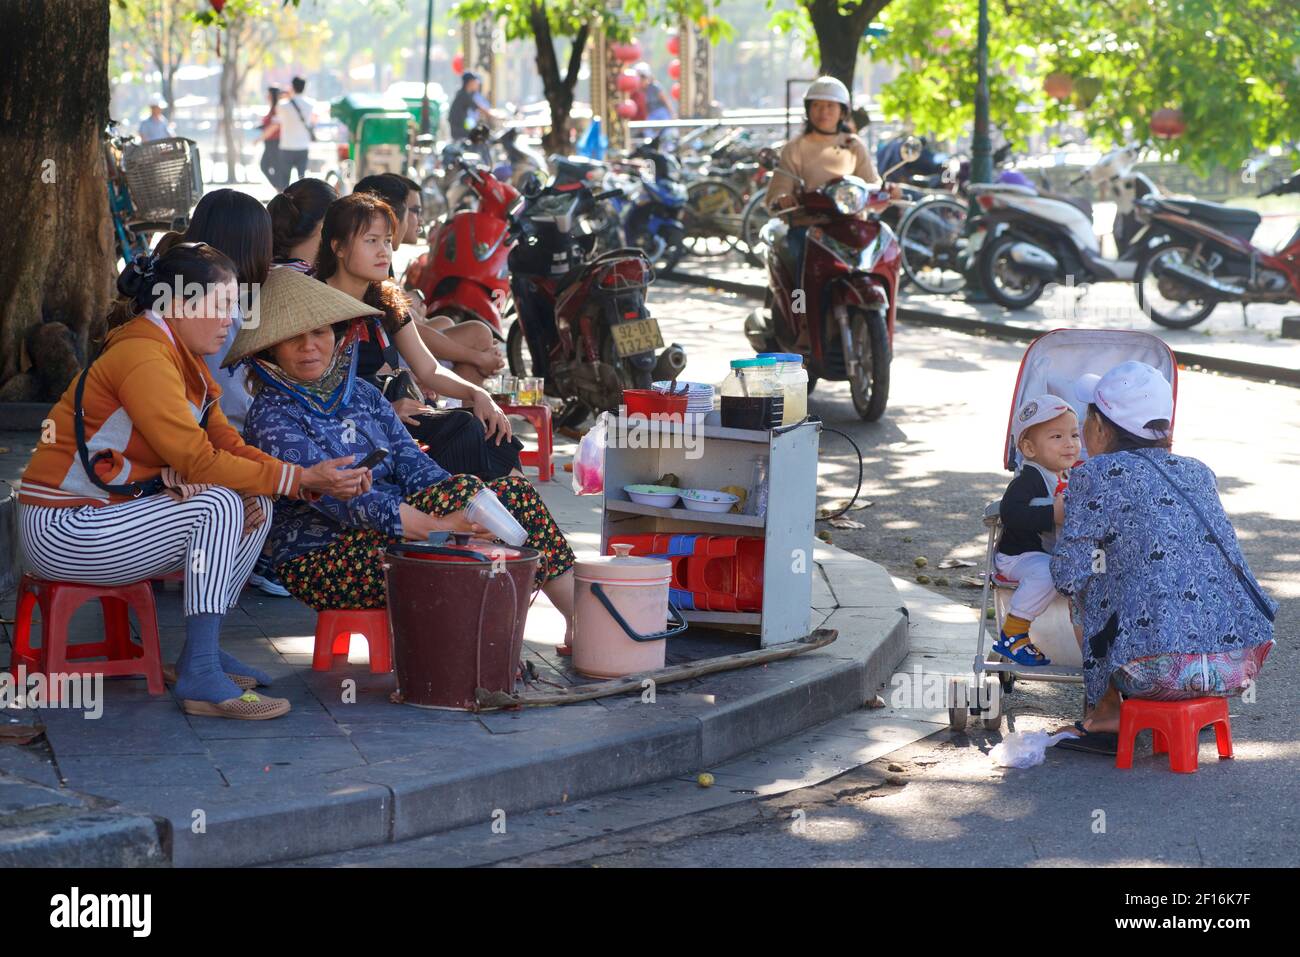 Vietnamese street life. Vendors selling snacks on the waterfront, Hoi An, Vietnam. Mother feeding boy in pram. Stock Photo